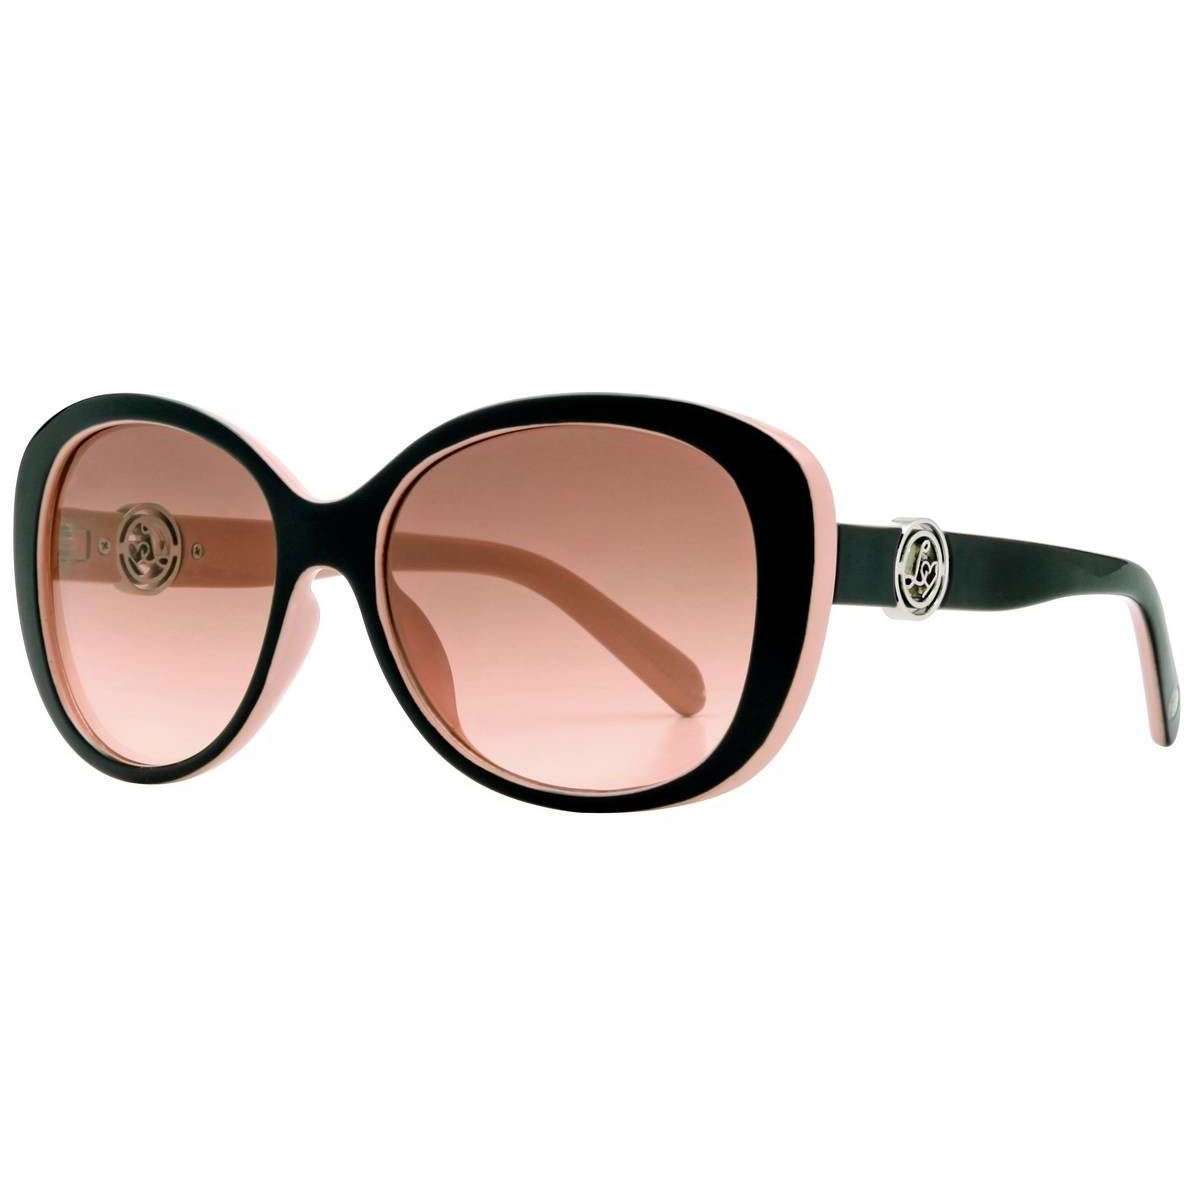 Lipsy London Angled Cat Eye Glam Sunglasses - Black